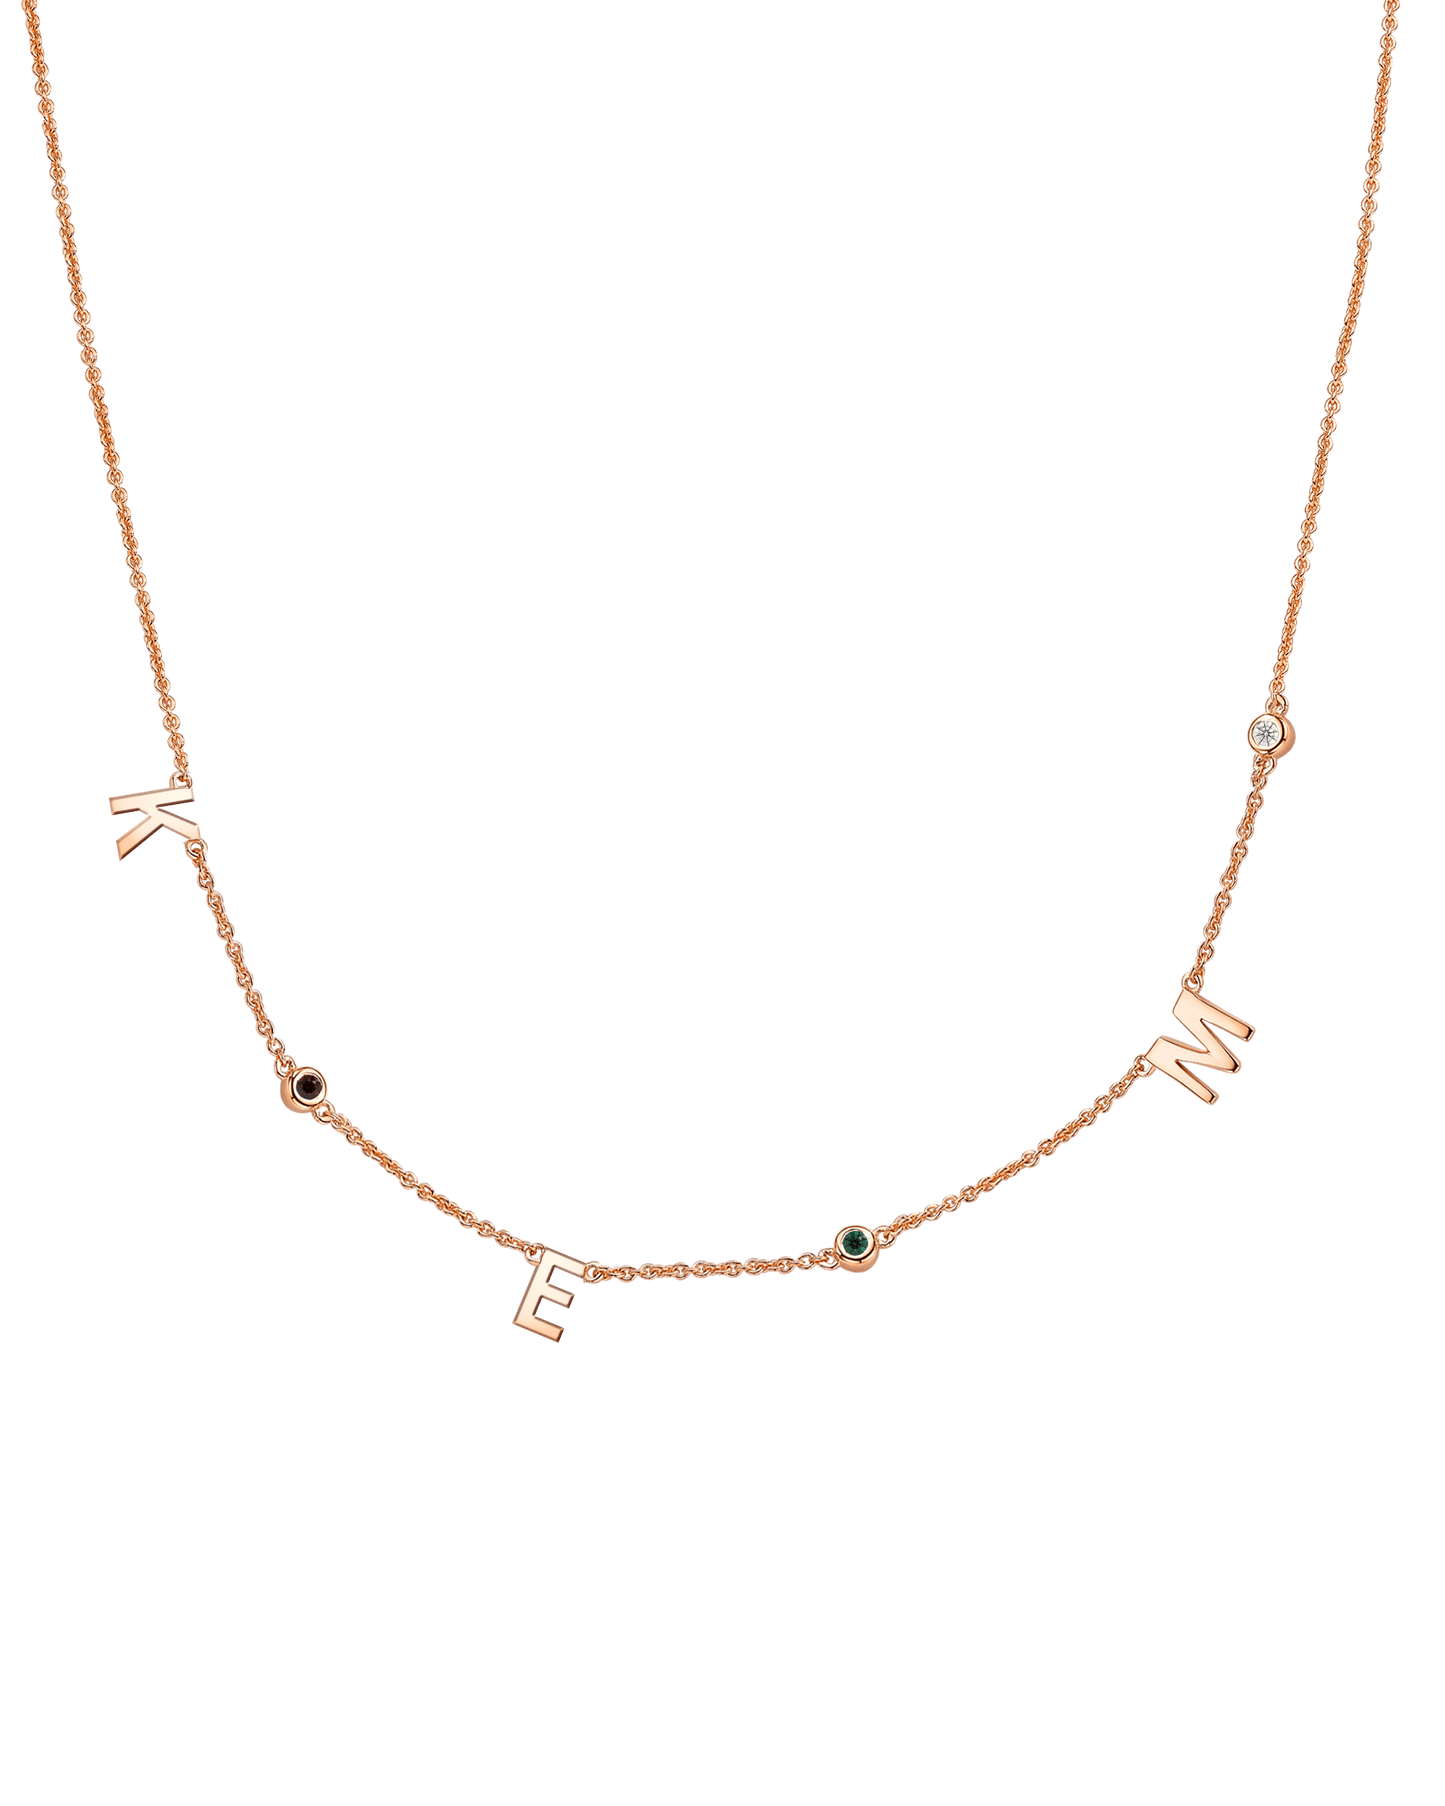 Initial Birthstone Necklace - 14K Rose Gold Necklaces magal-dev 3 Initials + 3 Birthstones Adjustable 16-17" (40cm-43cm) 